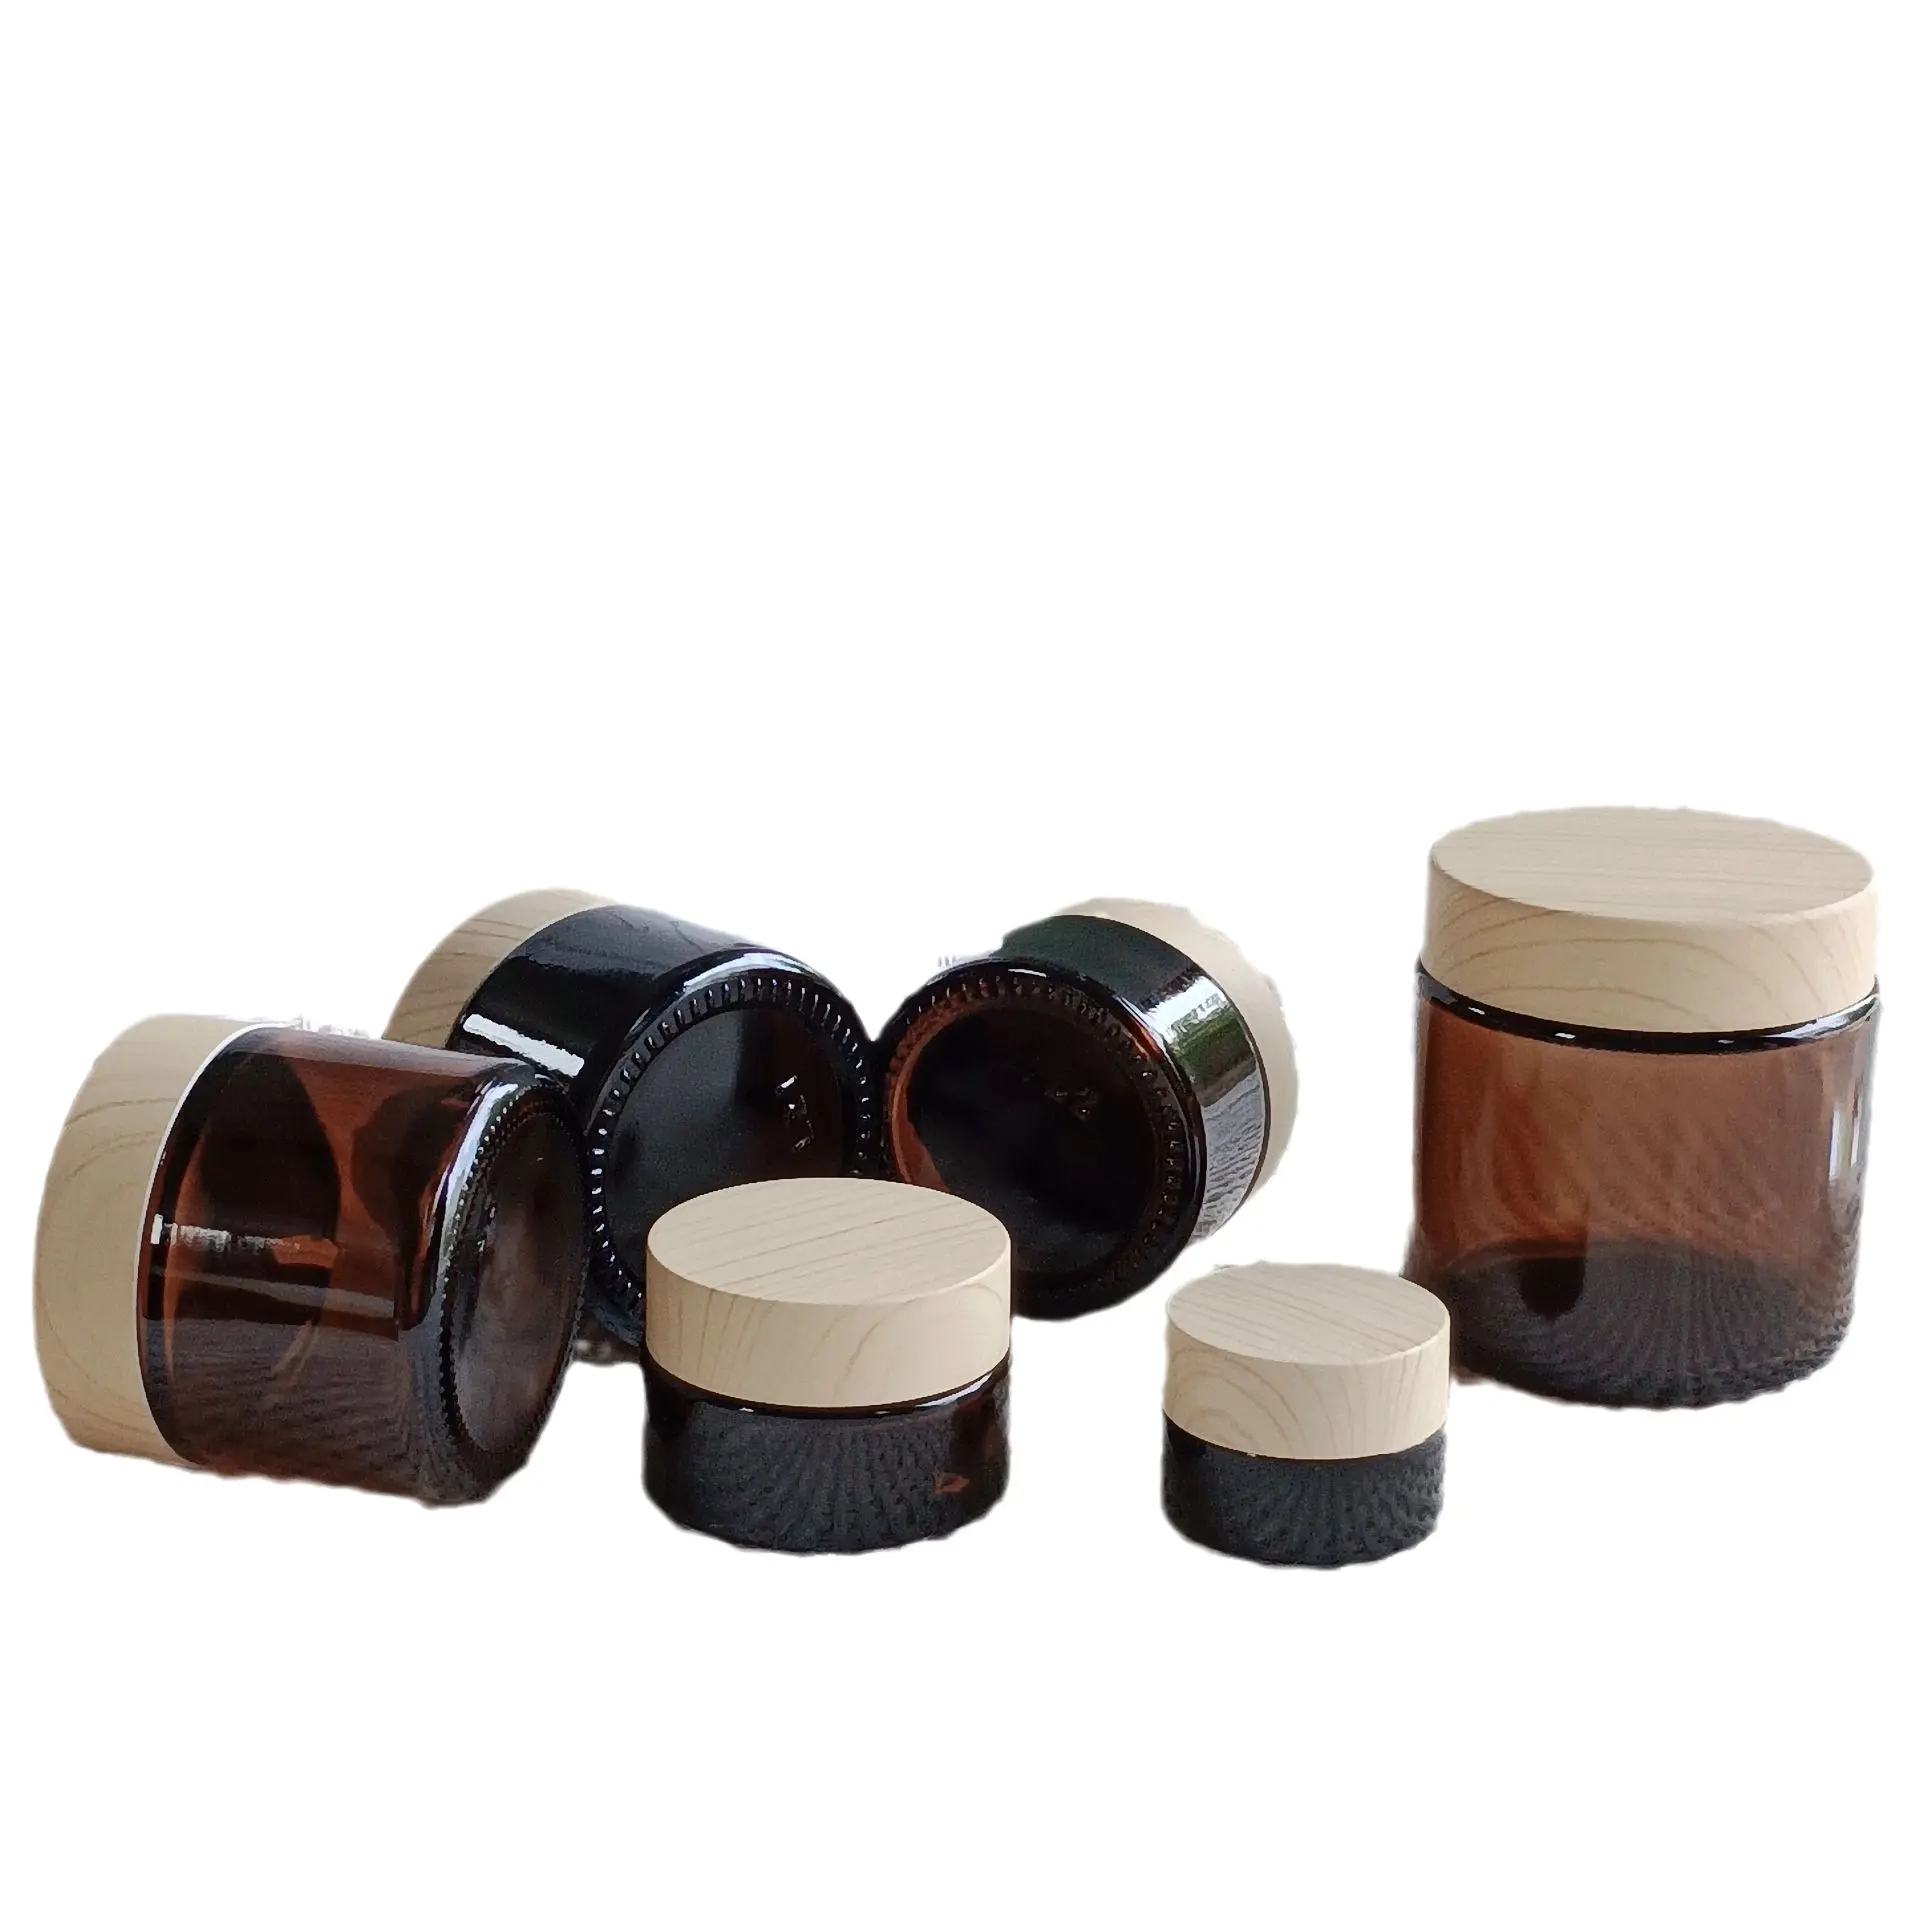 Produk Baru wadah kosmetik mentega tubuh alami 150g 250g 500g toples krim plastik bening Amber buram dengan tutup bambu